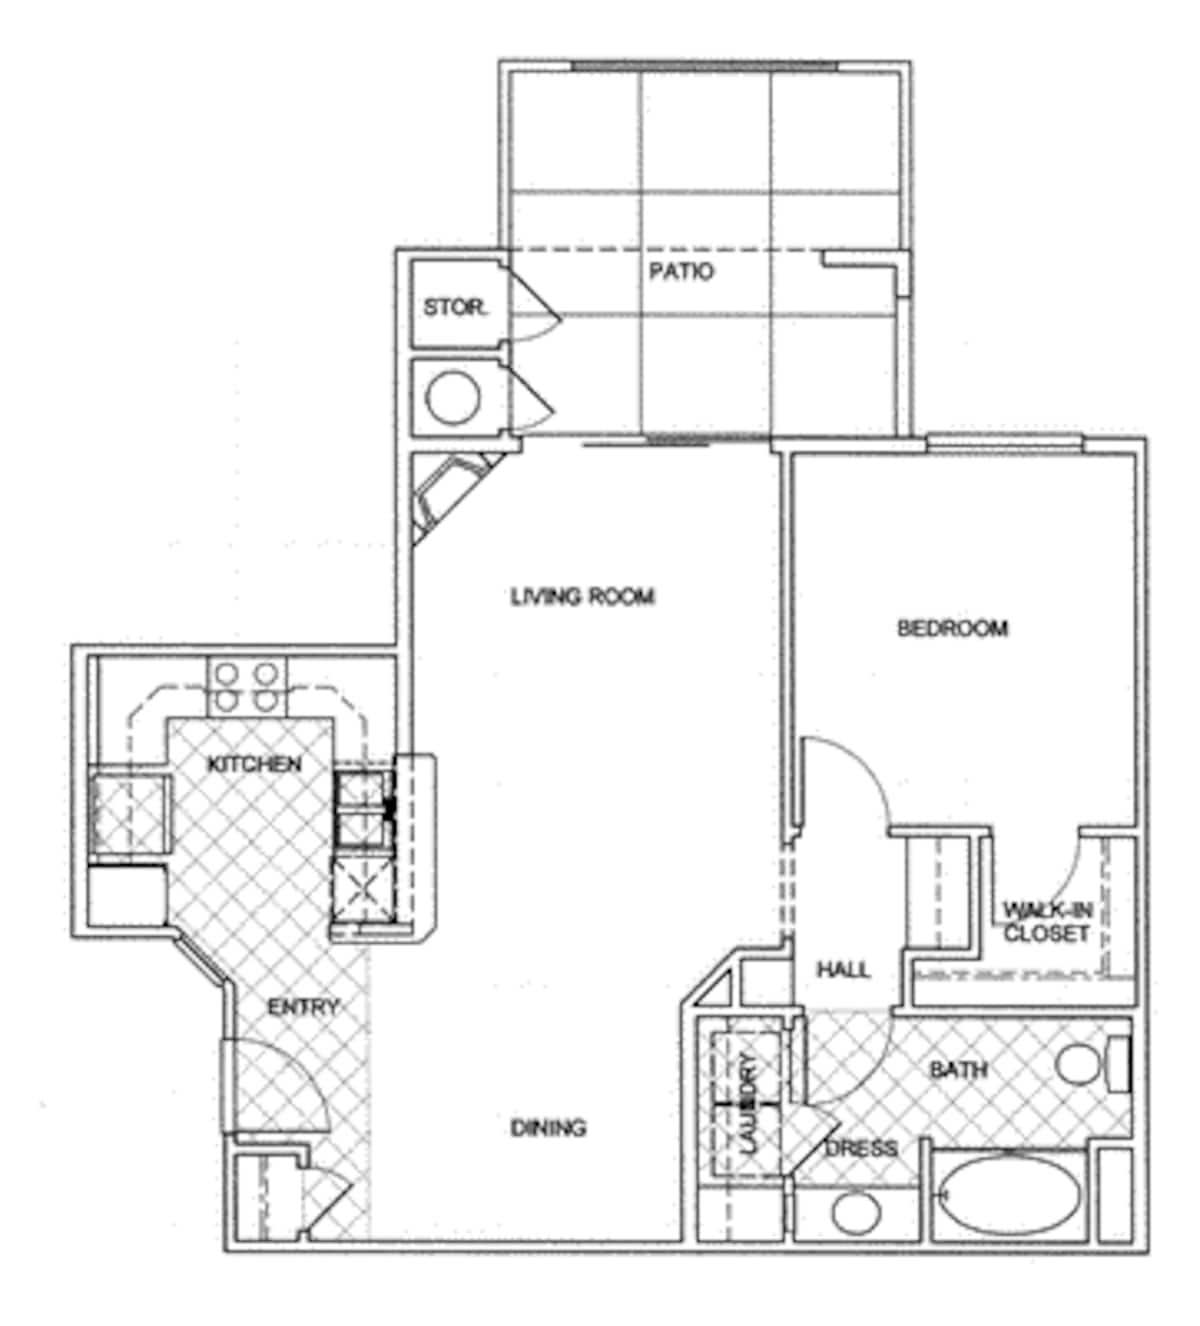 Floorplan diagram for Chalet, showing 1 bedroom